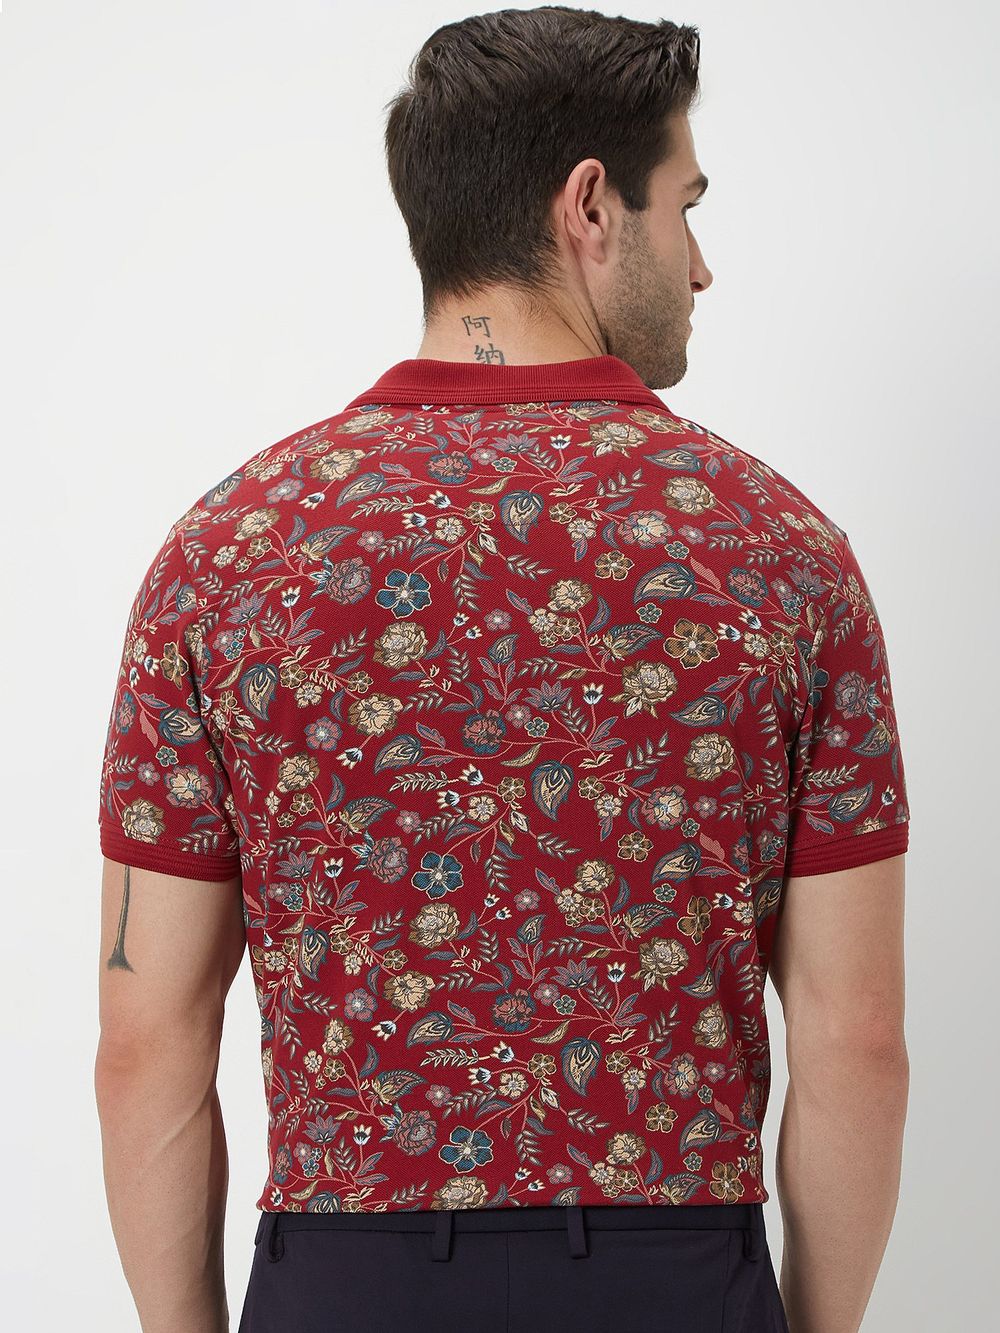 Maroon & Multi Floral Print Polo T-Shirt